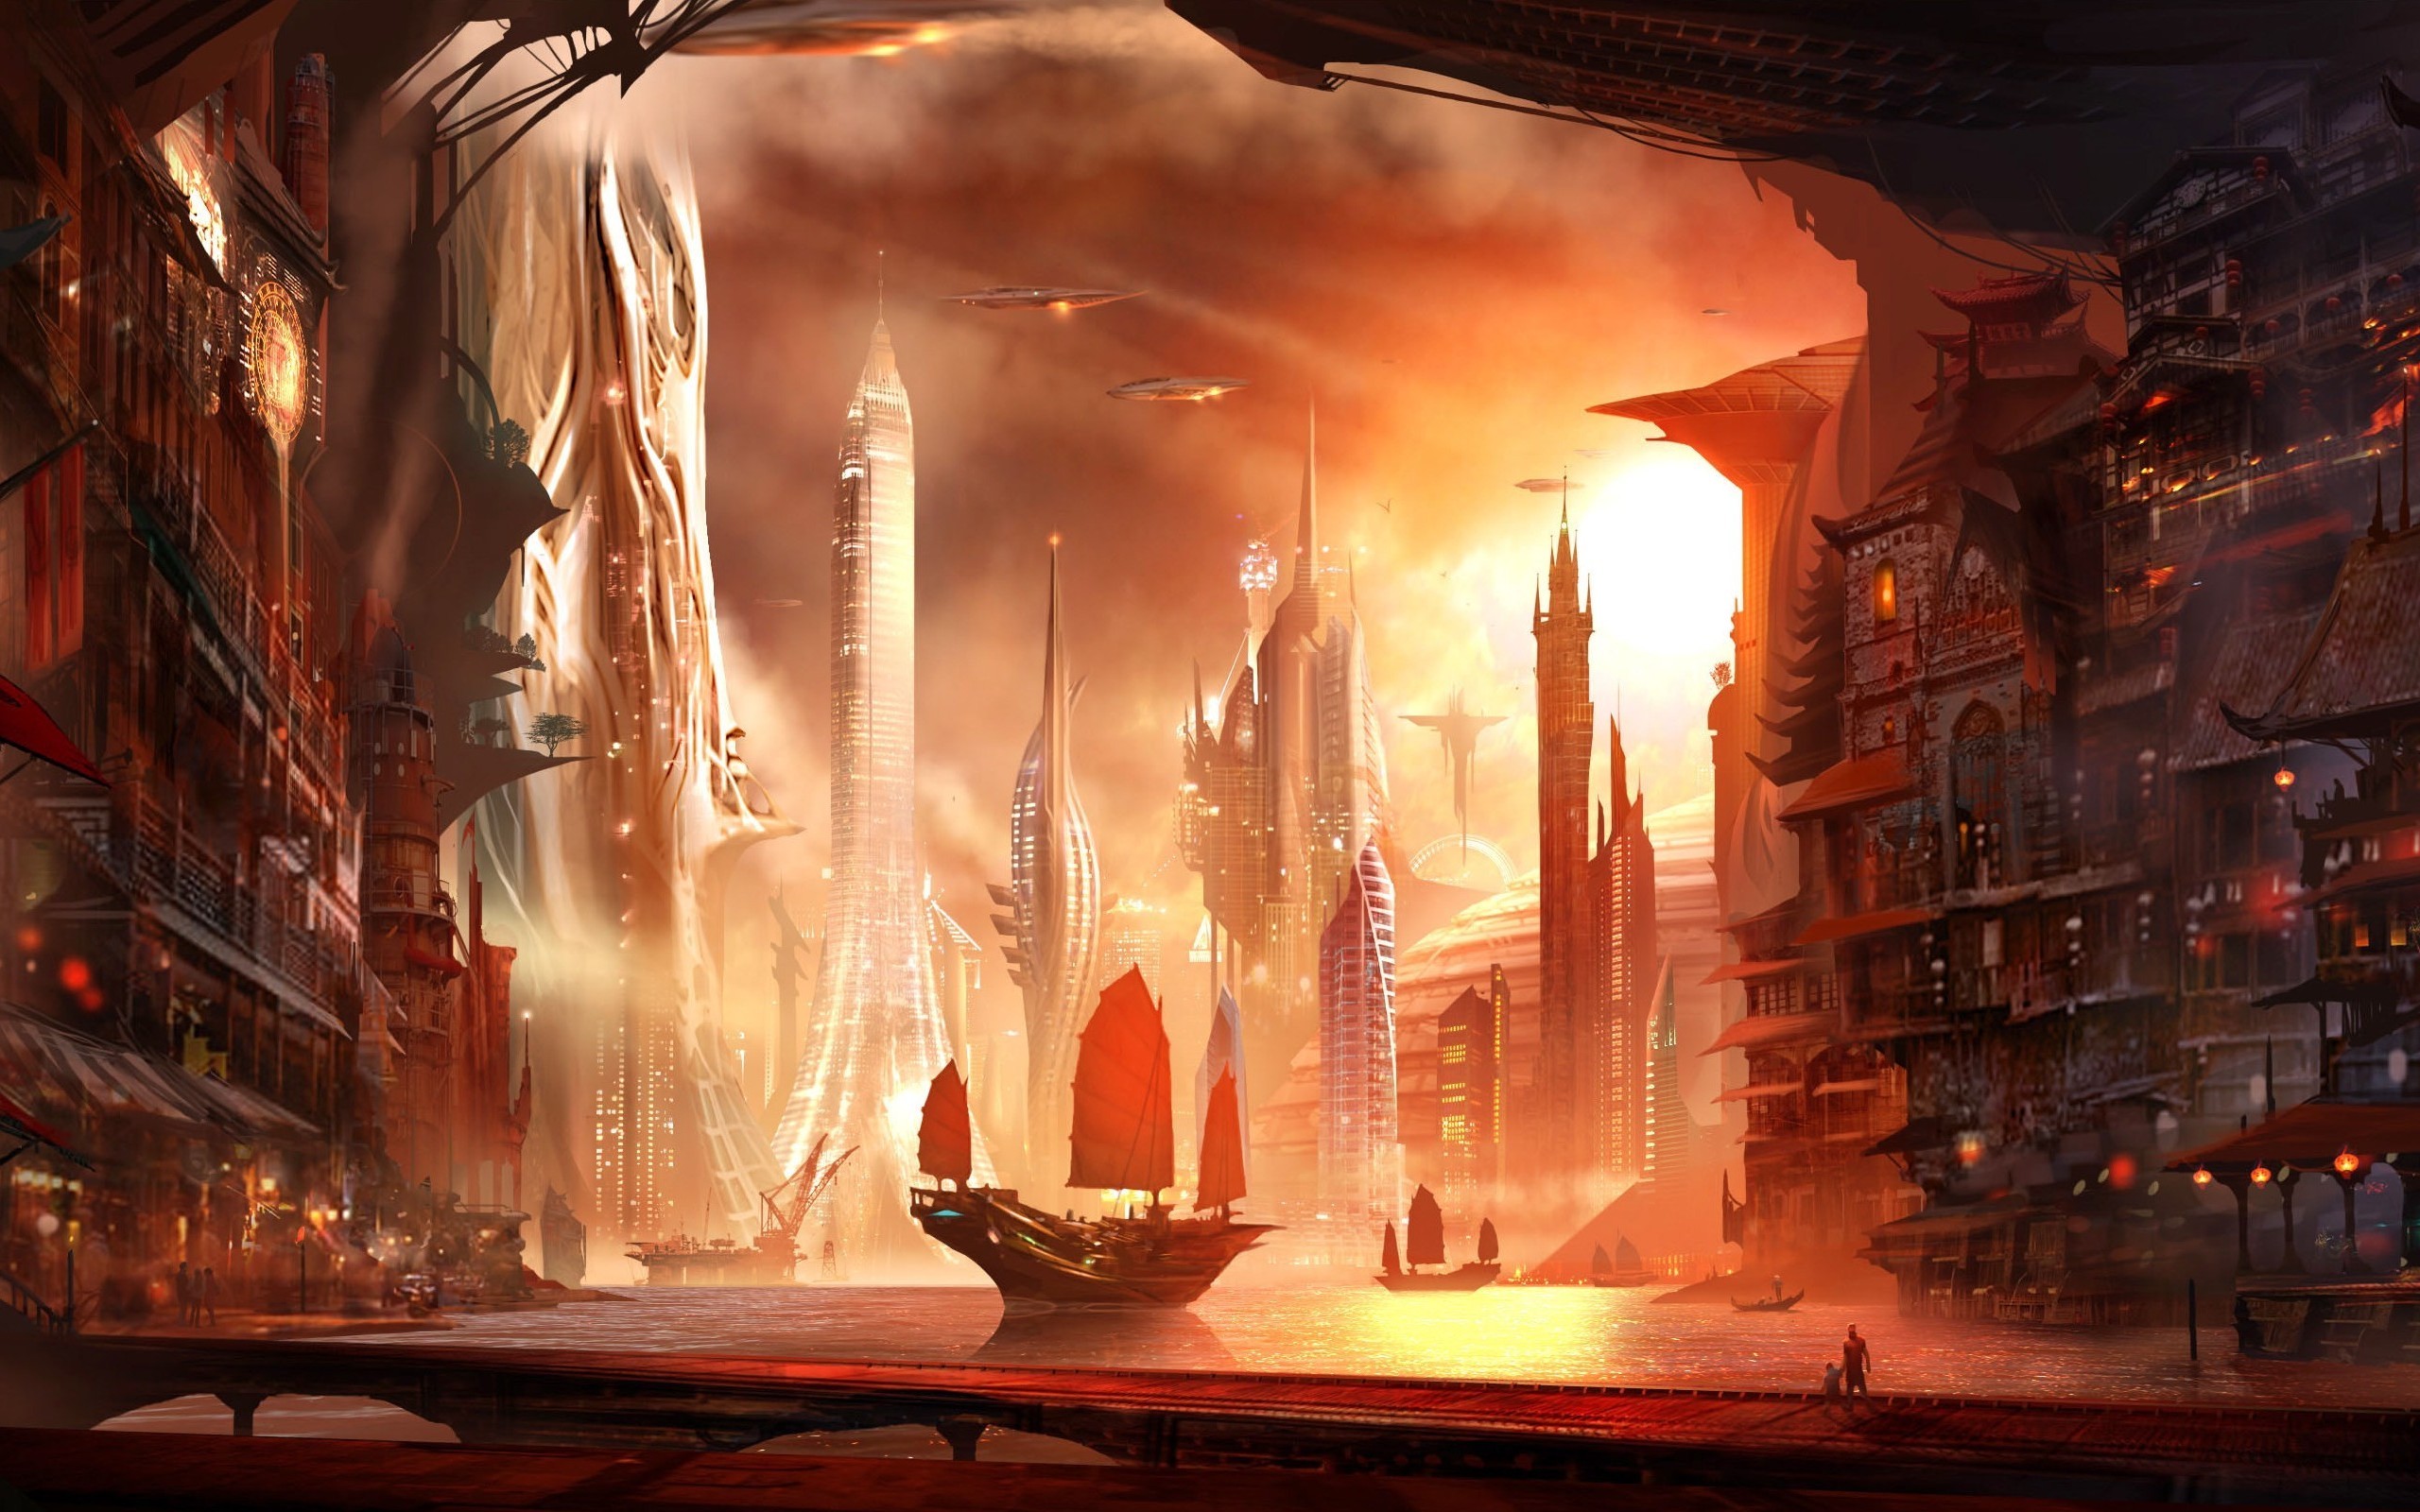 General 2560x1600 science fiction sailing ship futuristic fantasy art artwork sky digital art